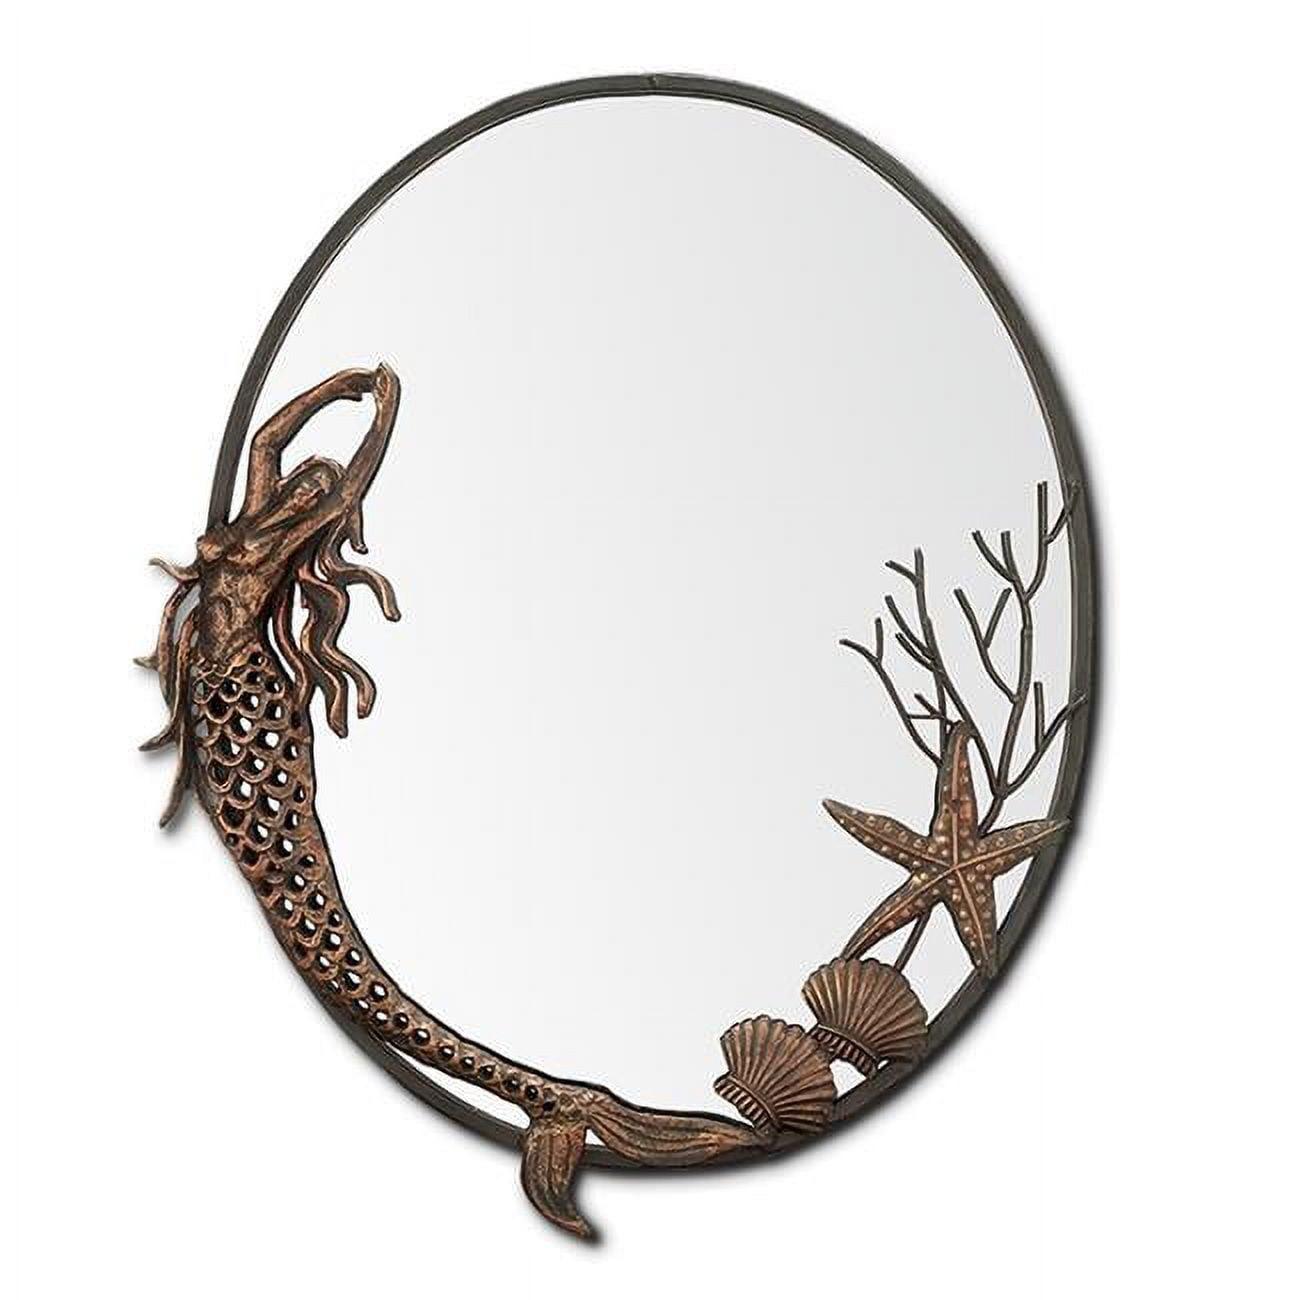 Coastal Elegance Bronze Oval Wall Mirror with Mermaid Design